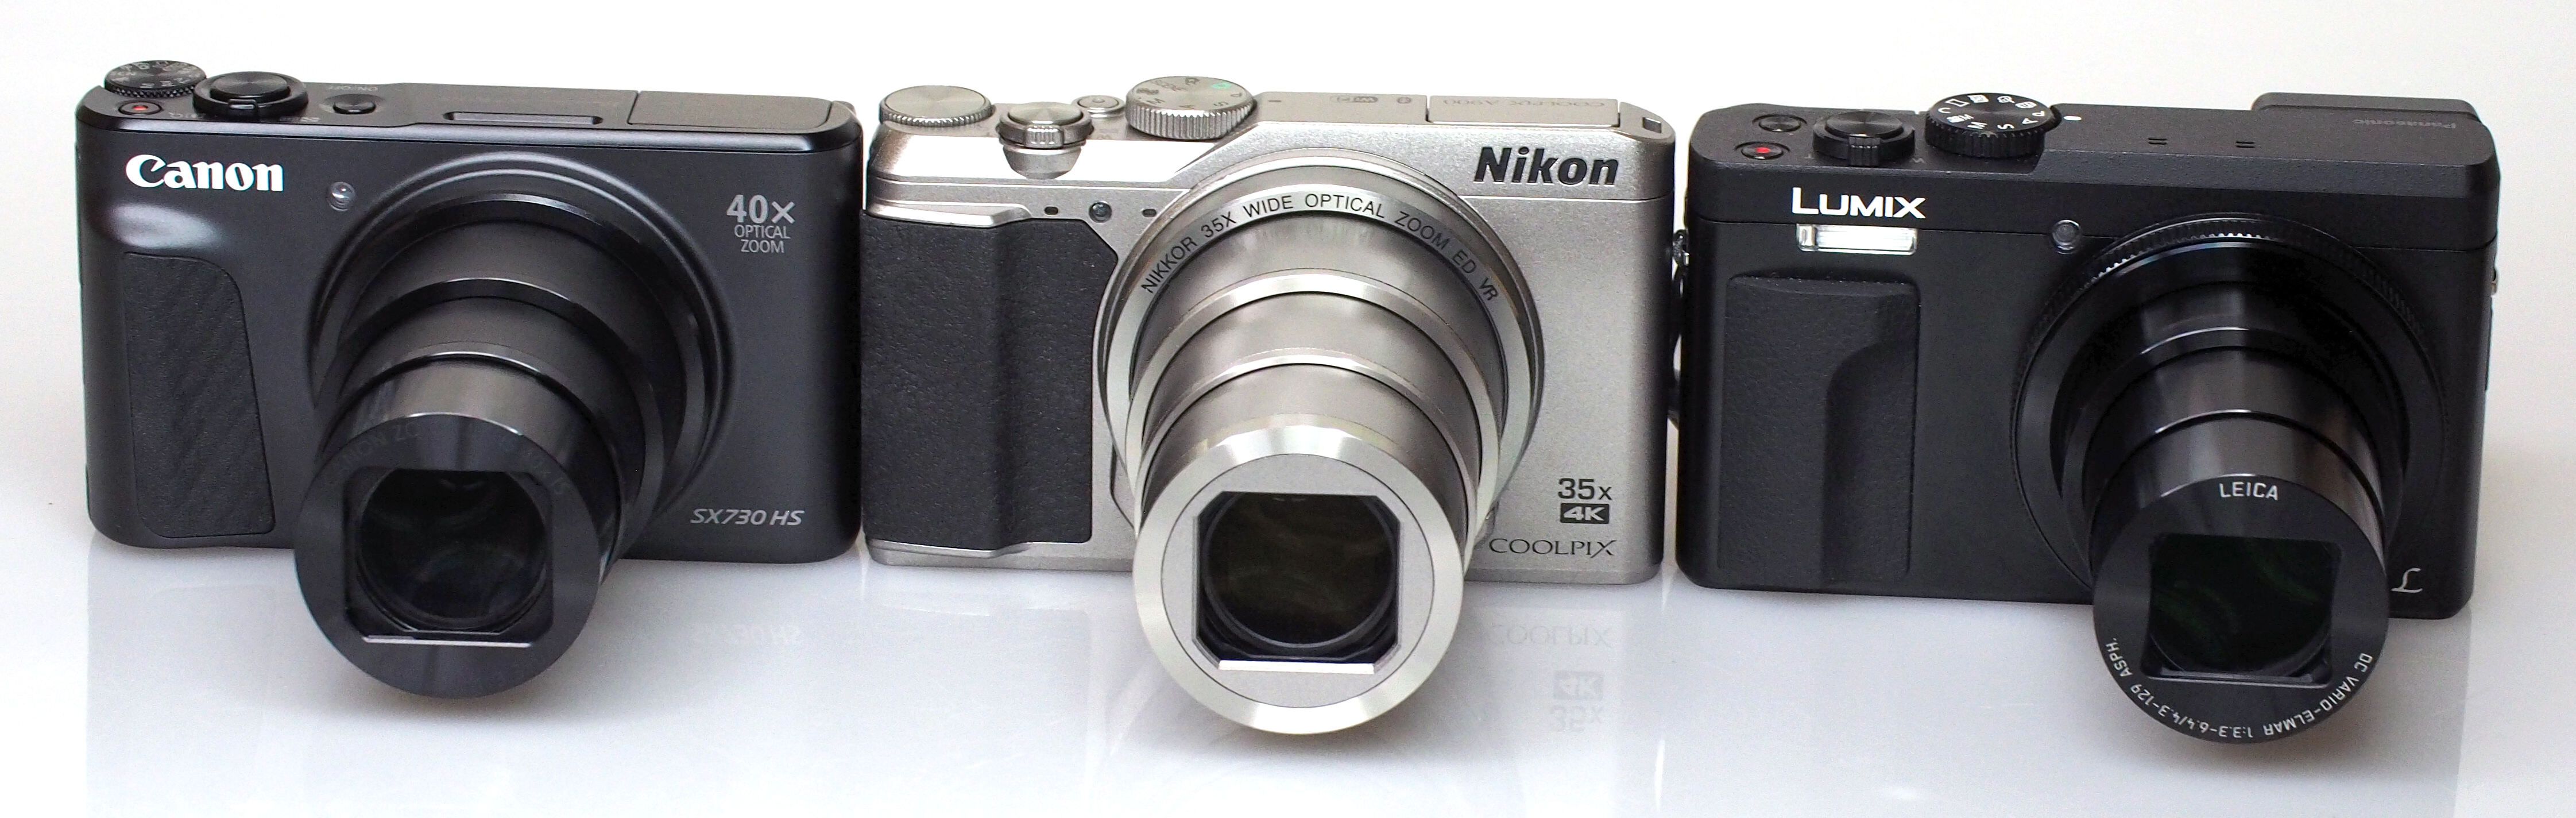 Highres Canon Powershot S X730 Hs Vs Nikon Coolpix A900 Vs Panasonic Lumix T Z90 2 1496652423